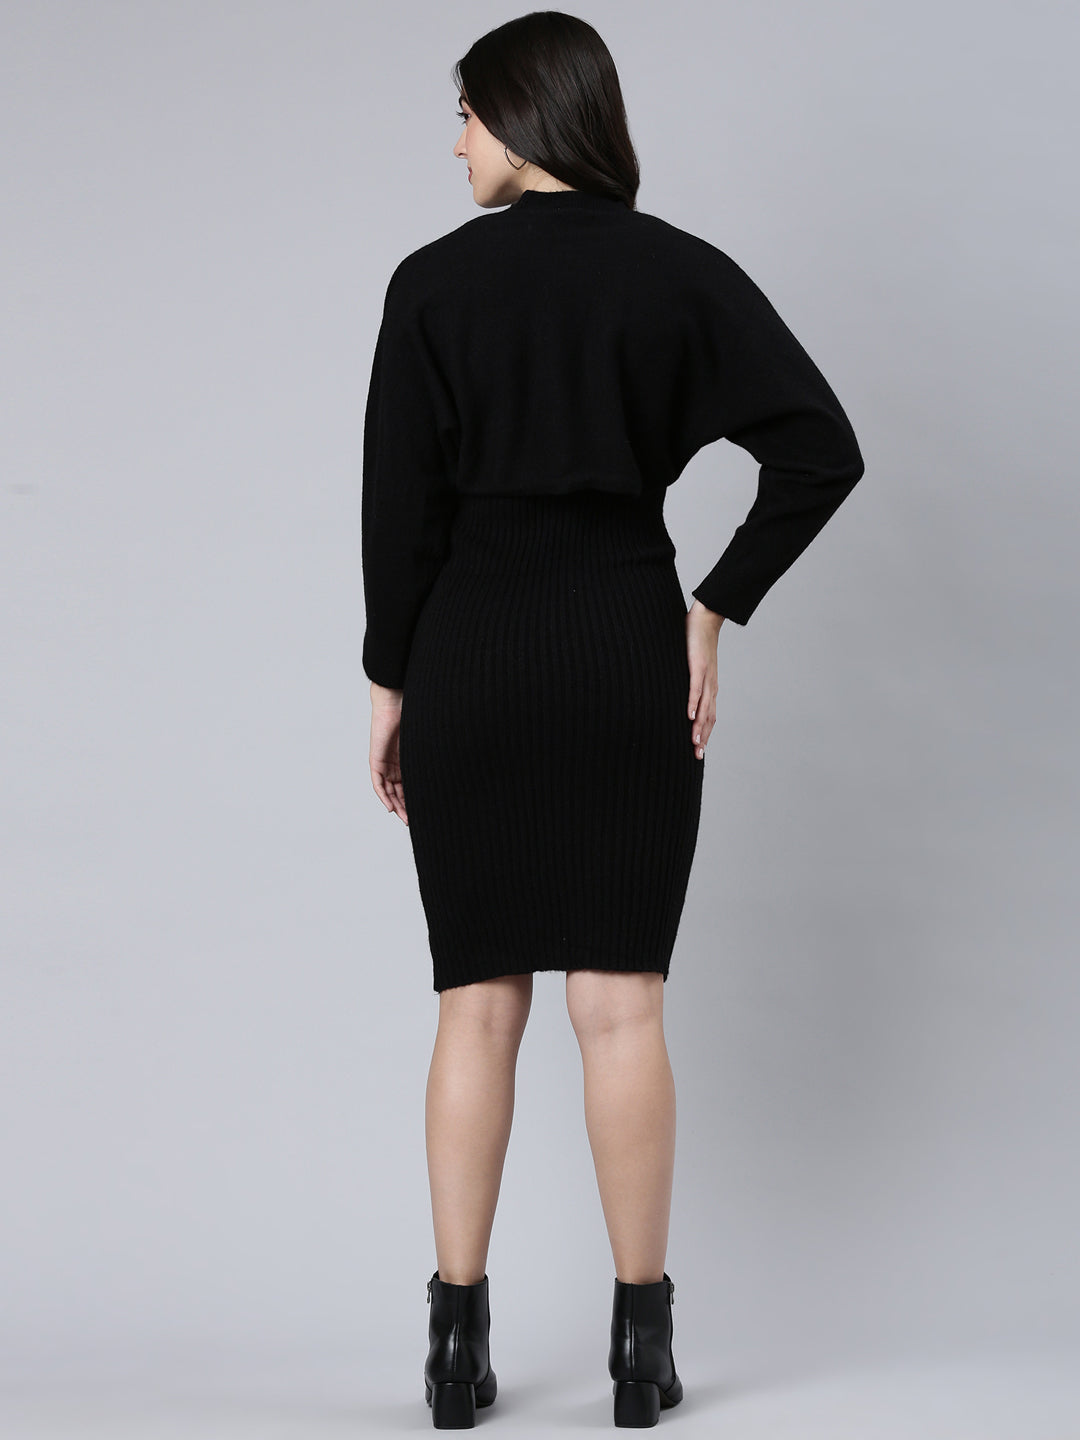 Women Self Design Black Bodycon Dress Comes with Top